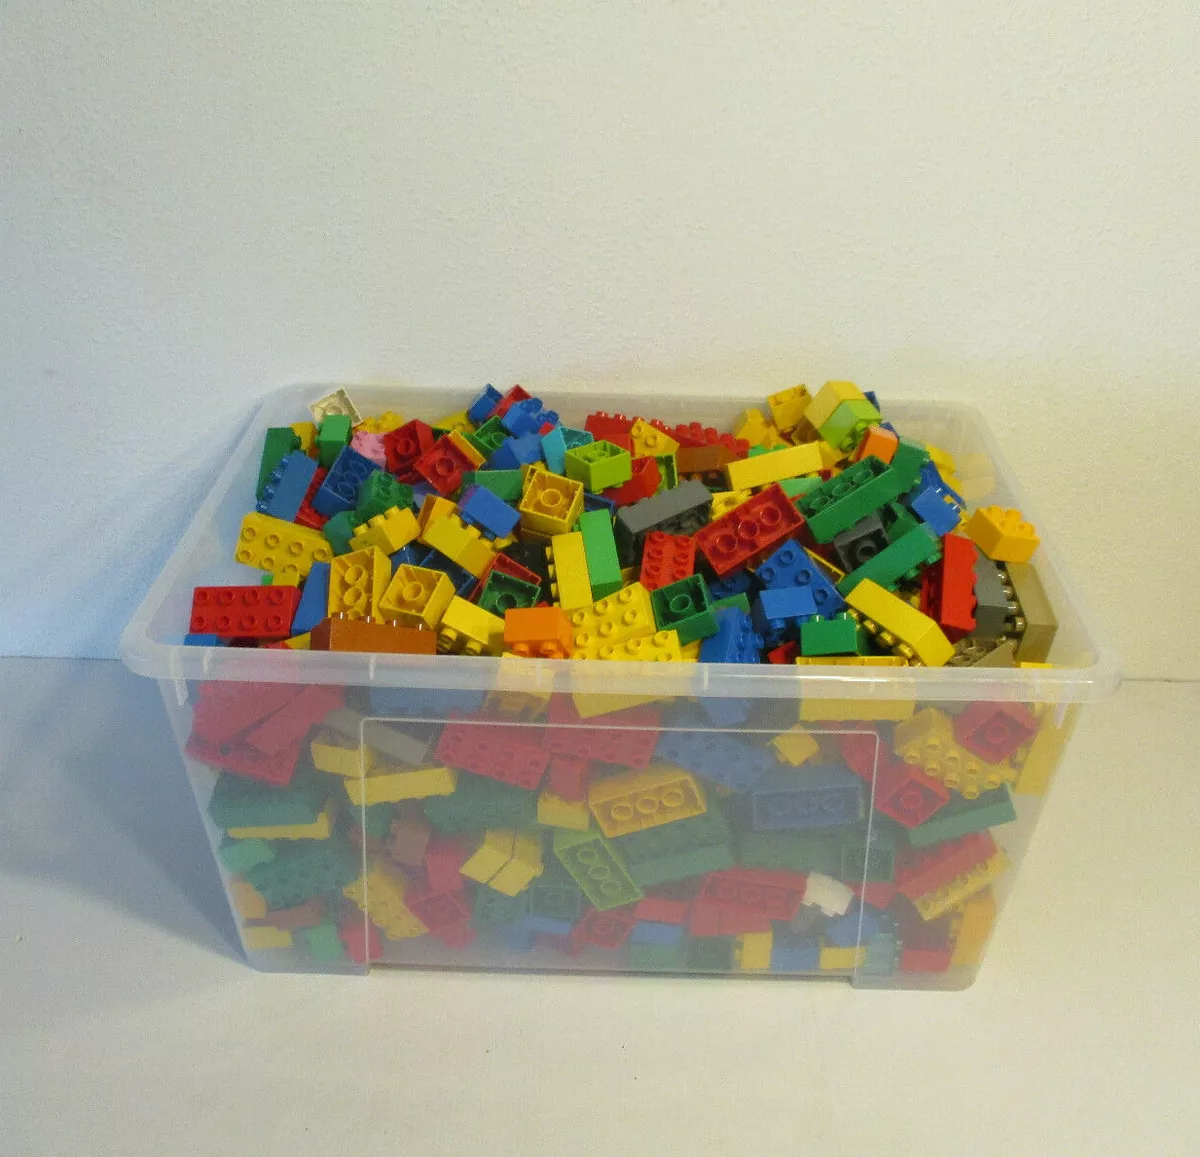 HK) LEGO Duplo Colorful Building Blocks Bricks 20 2x4 + 40 2x2 Studs Pack |